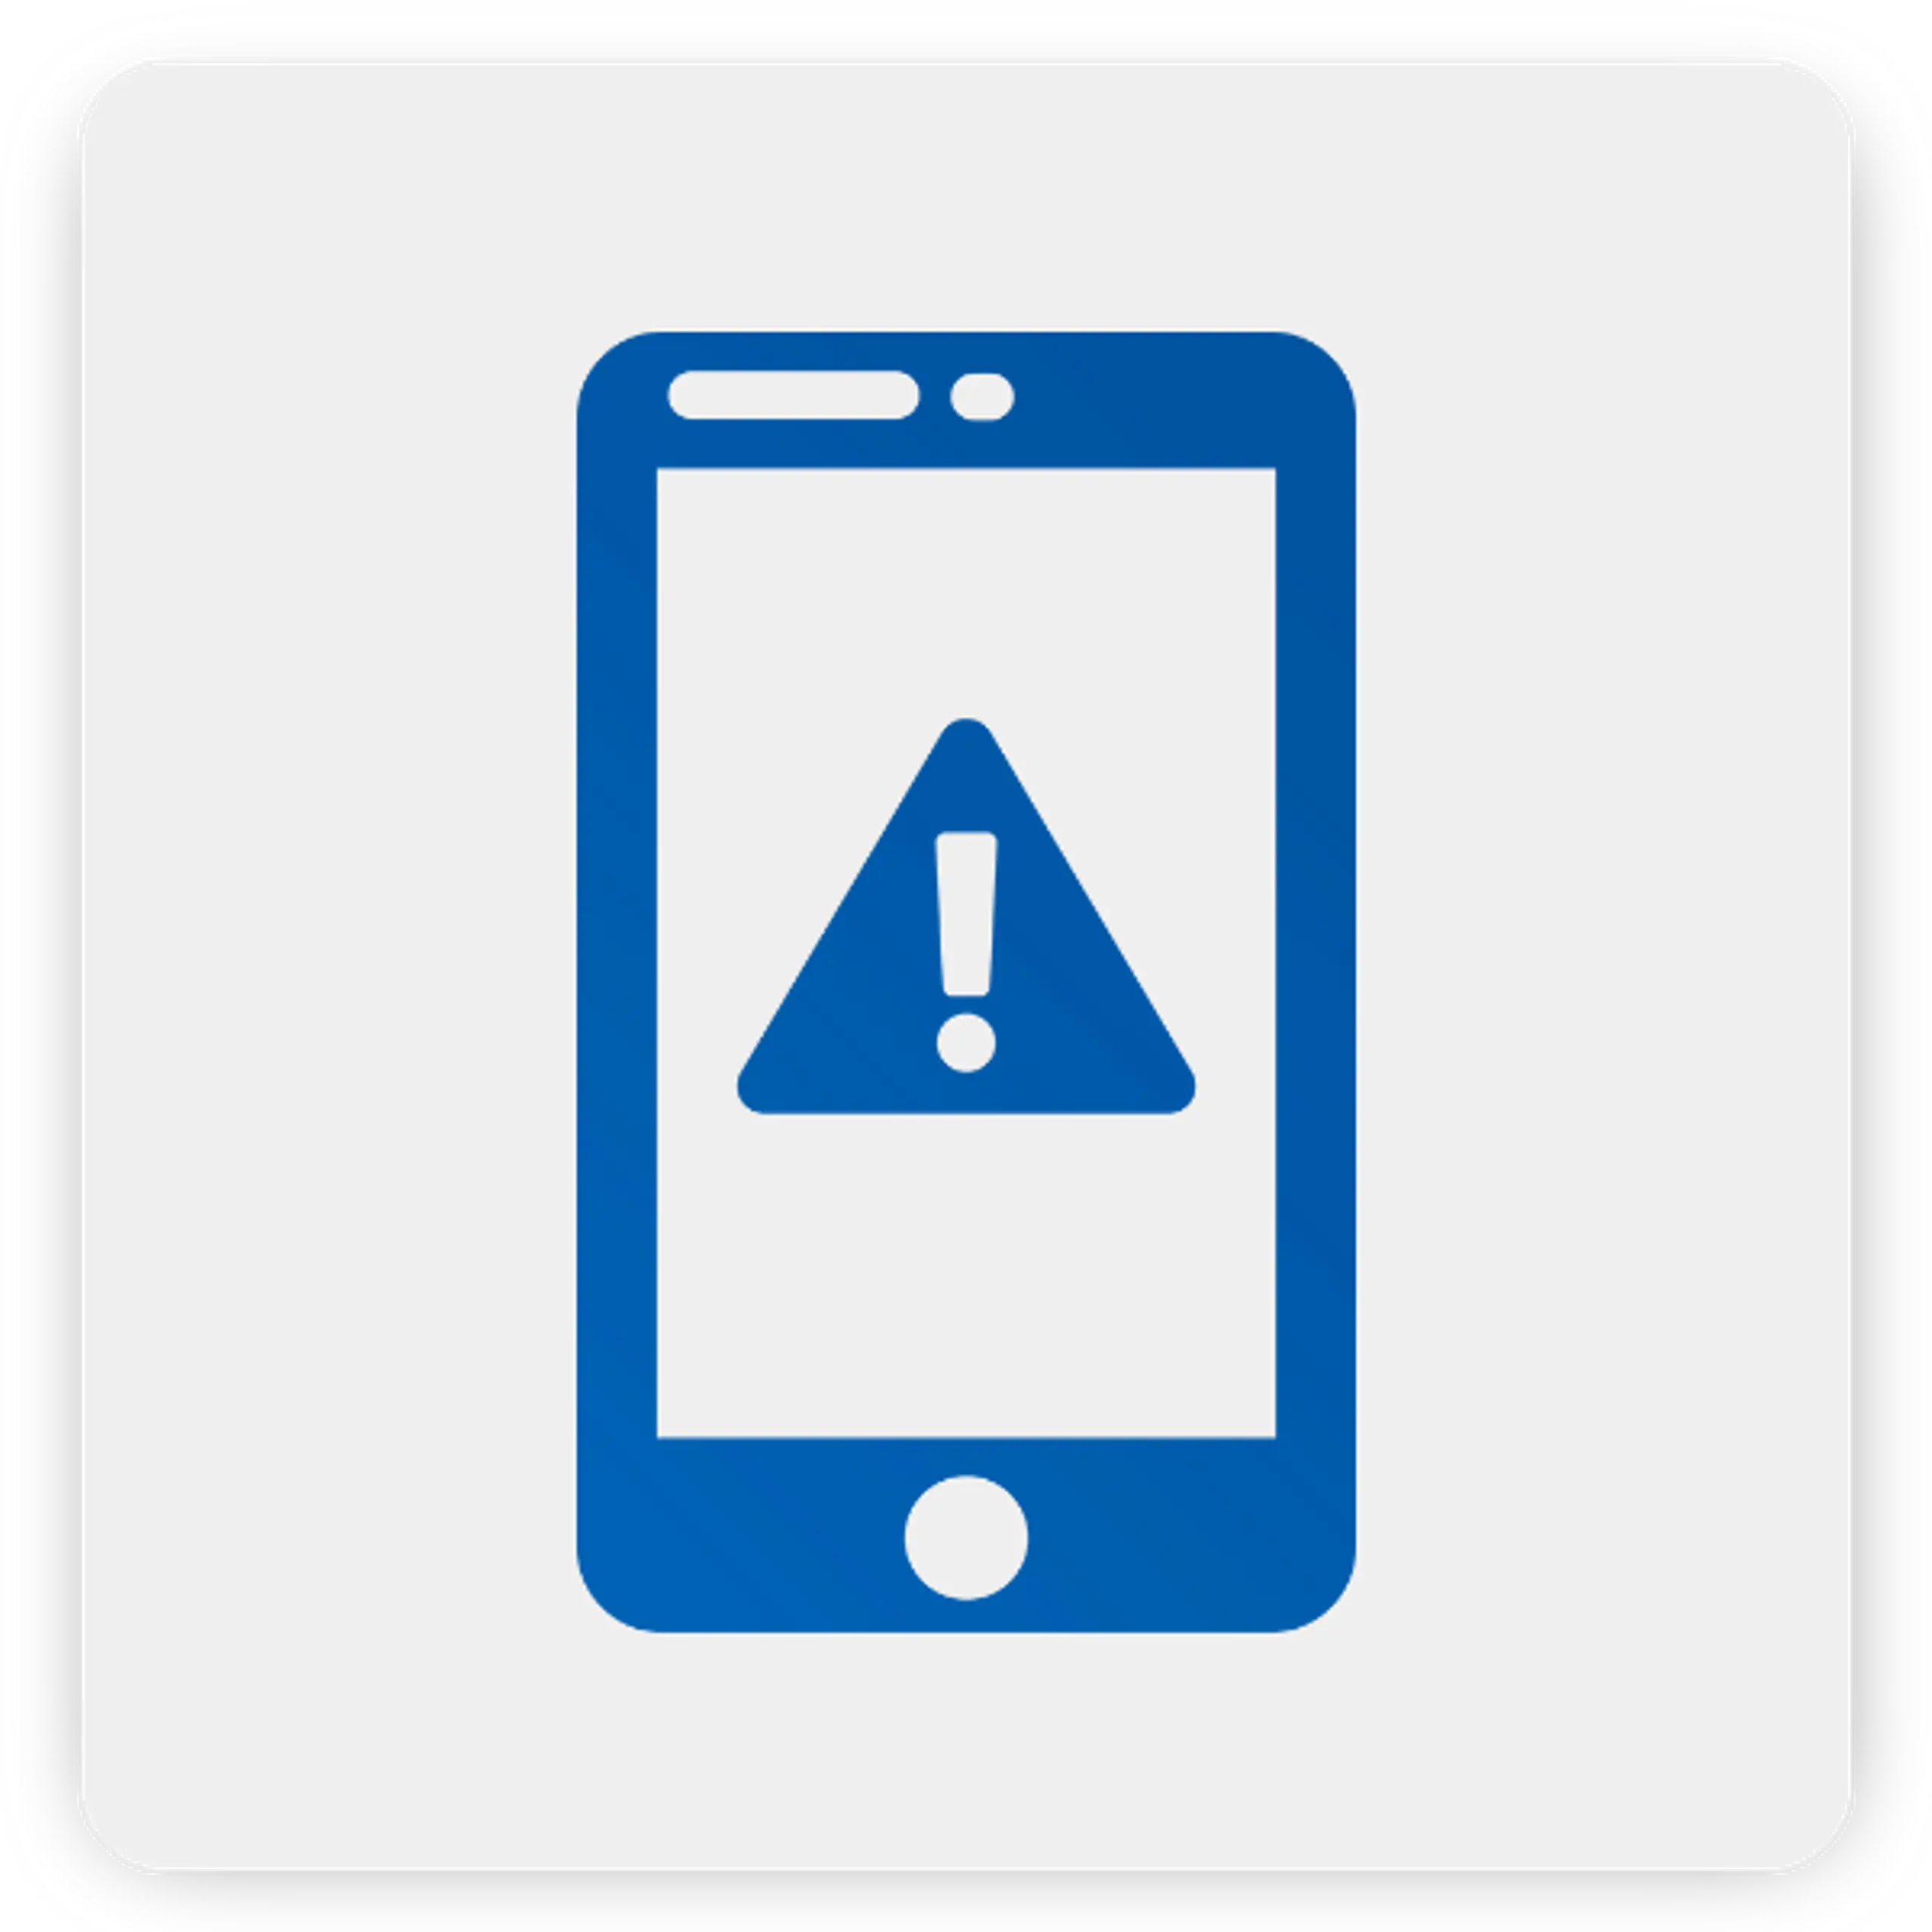 Warning on mobile phone icon